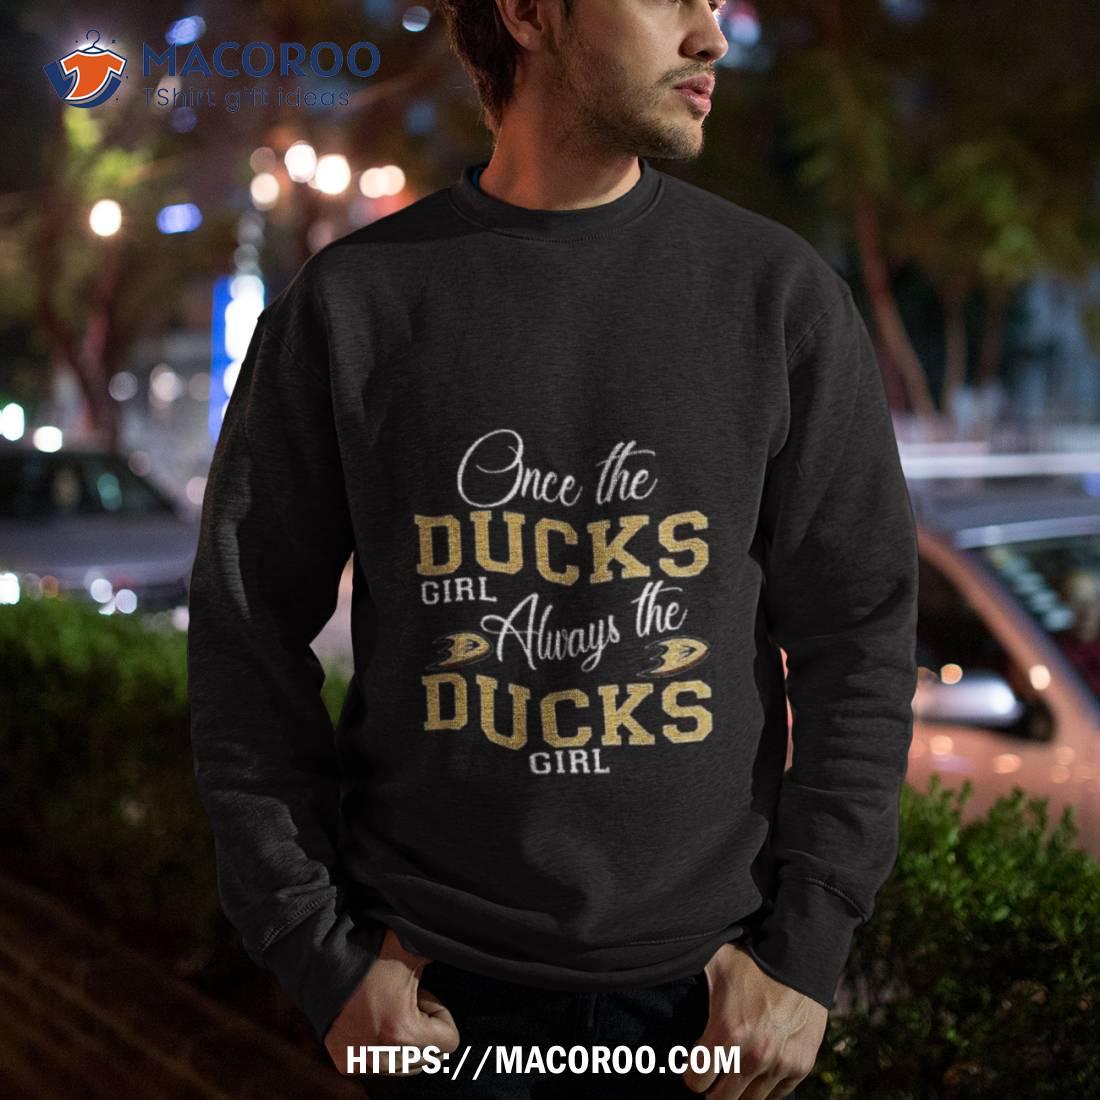 Mighty Ducks Crewneck Sweatshirts for Sale